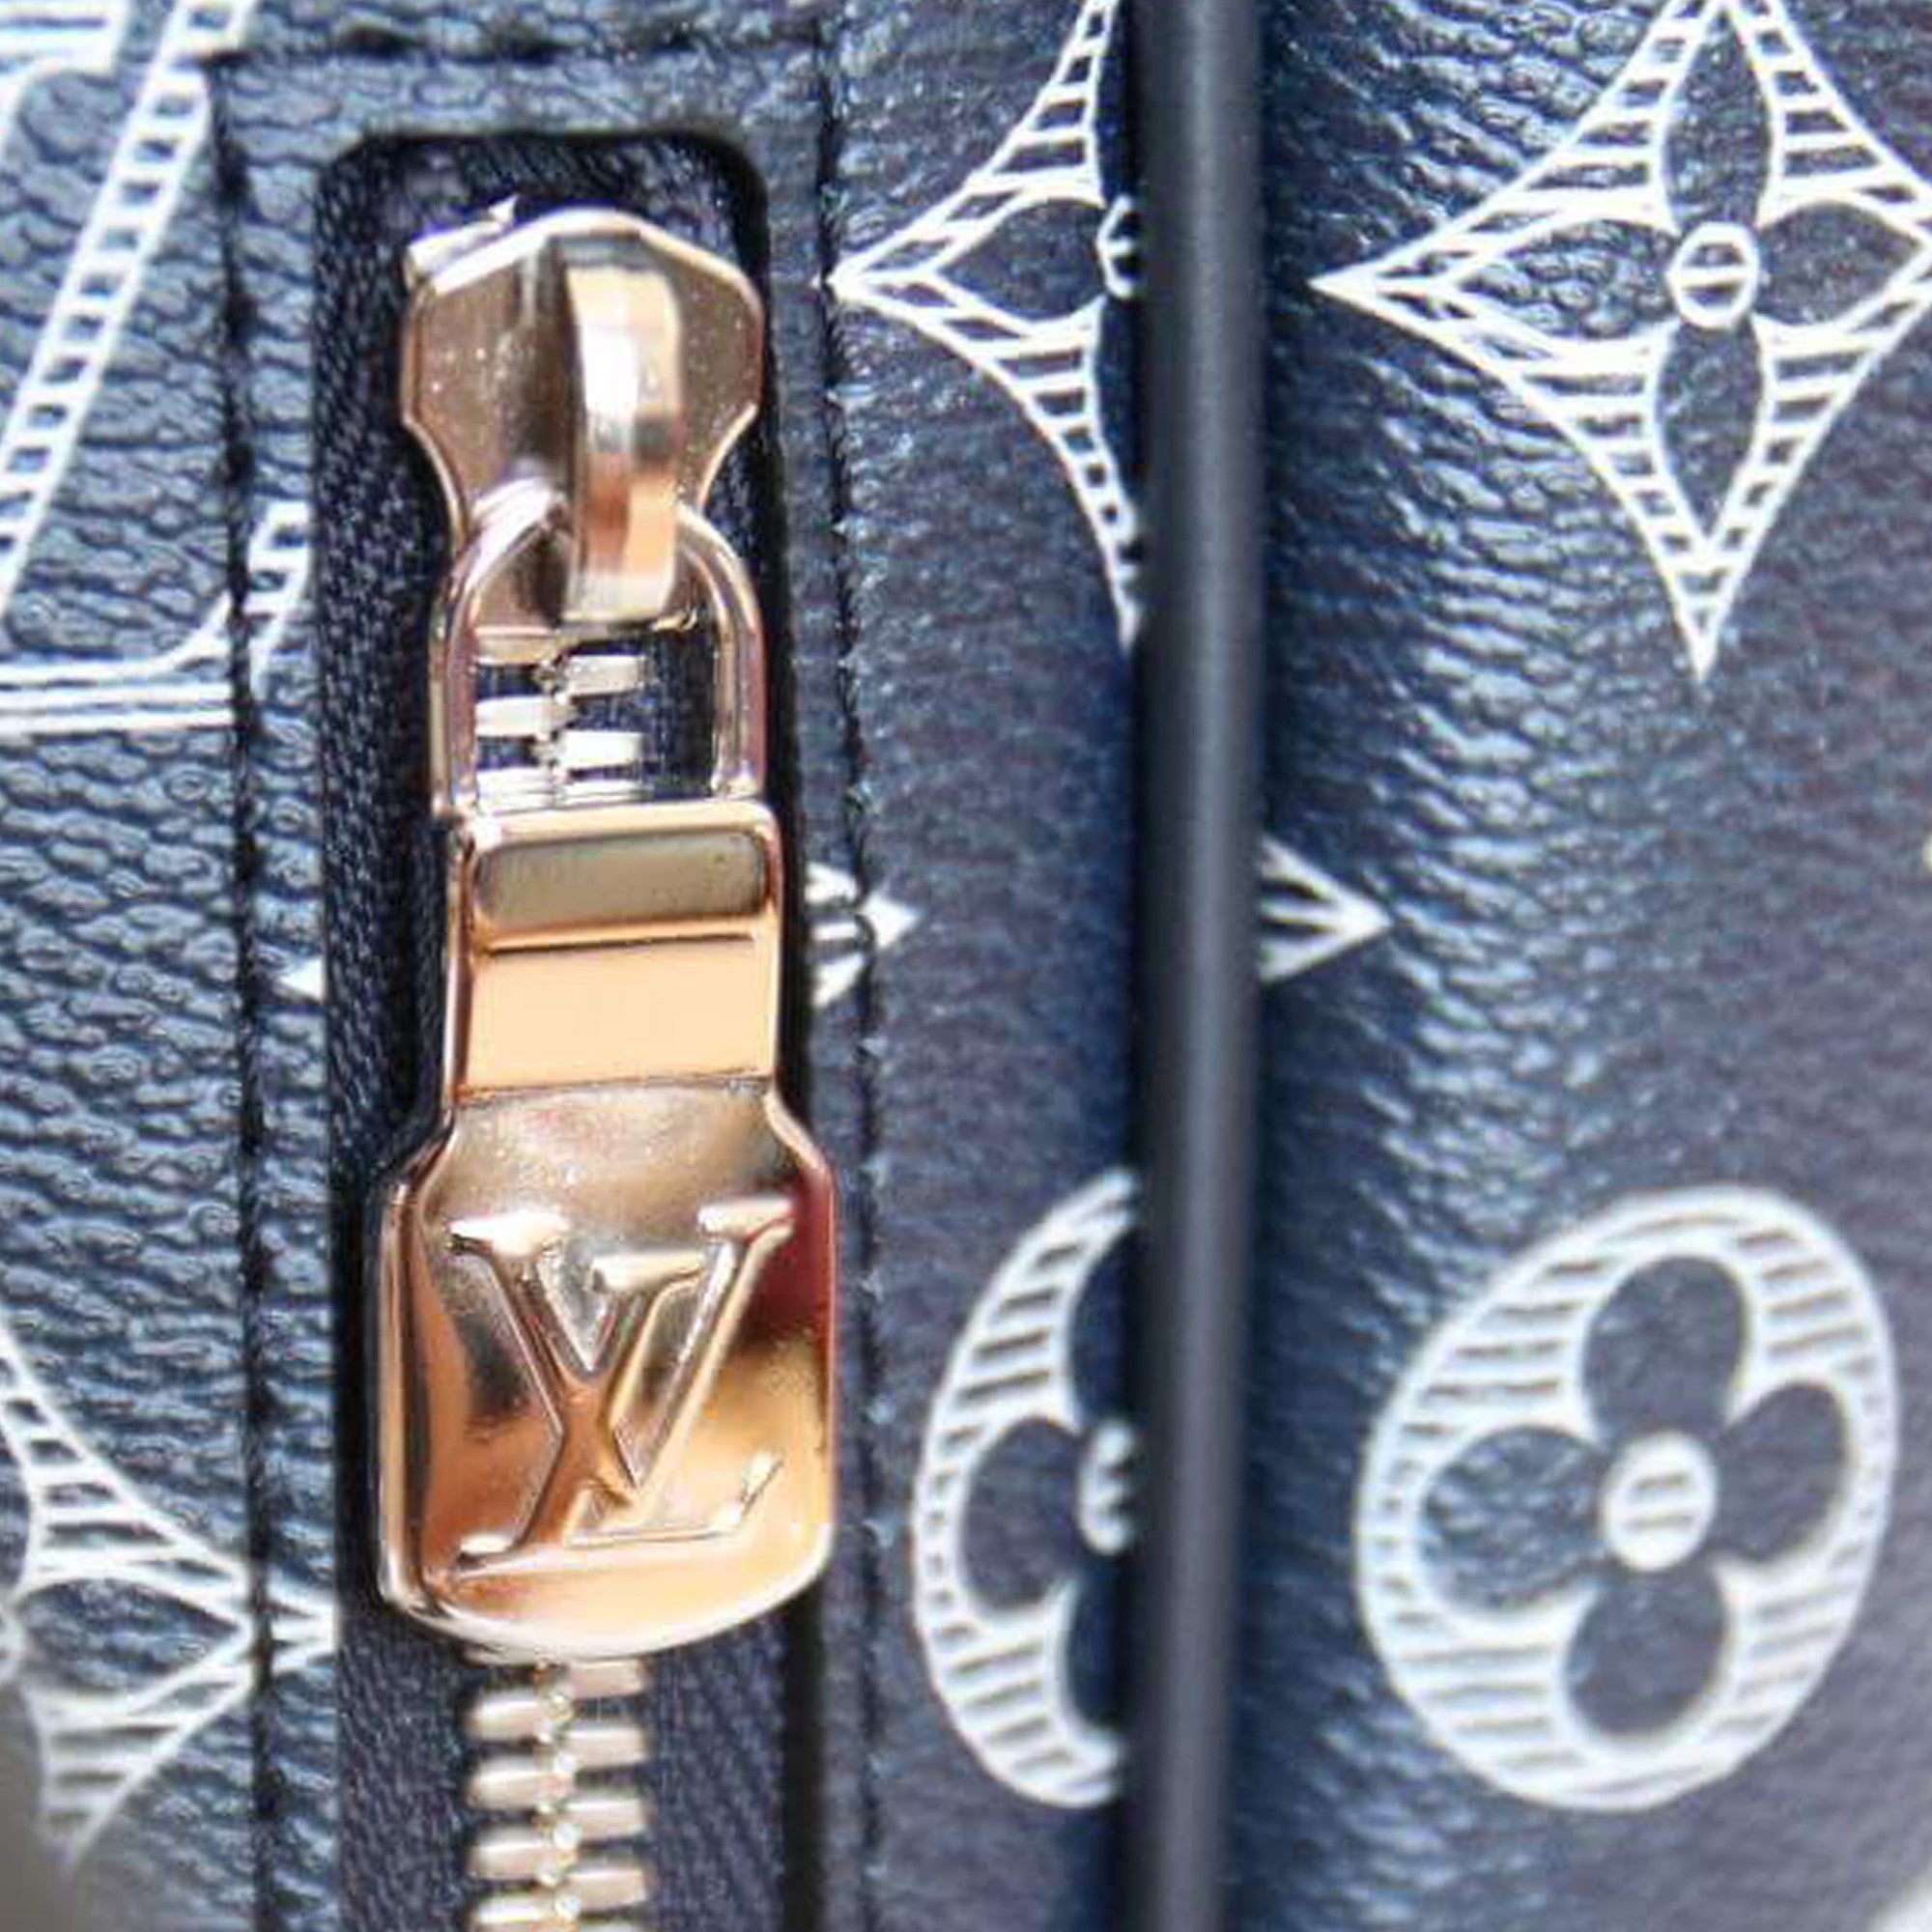 Louis Vuitton, Bags, Reallouis Vuitton Backpack